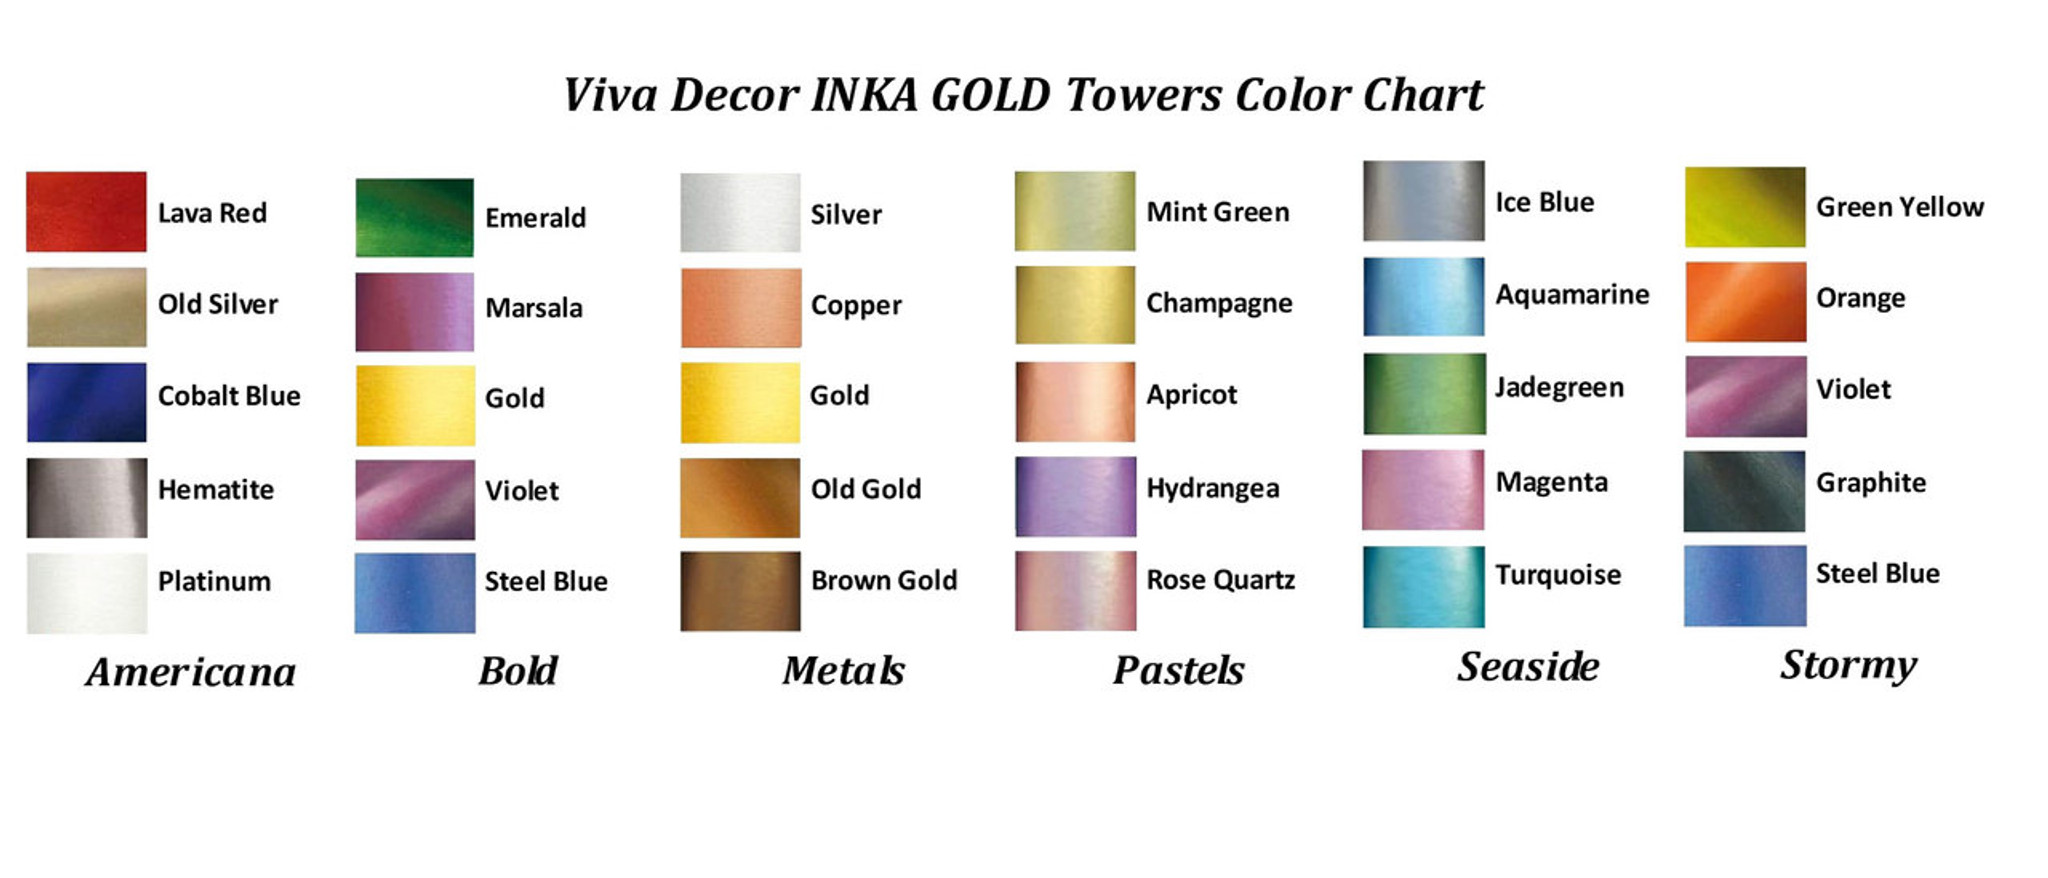 Viva Decor Inka Gold Color Chart